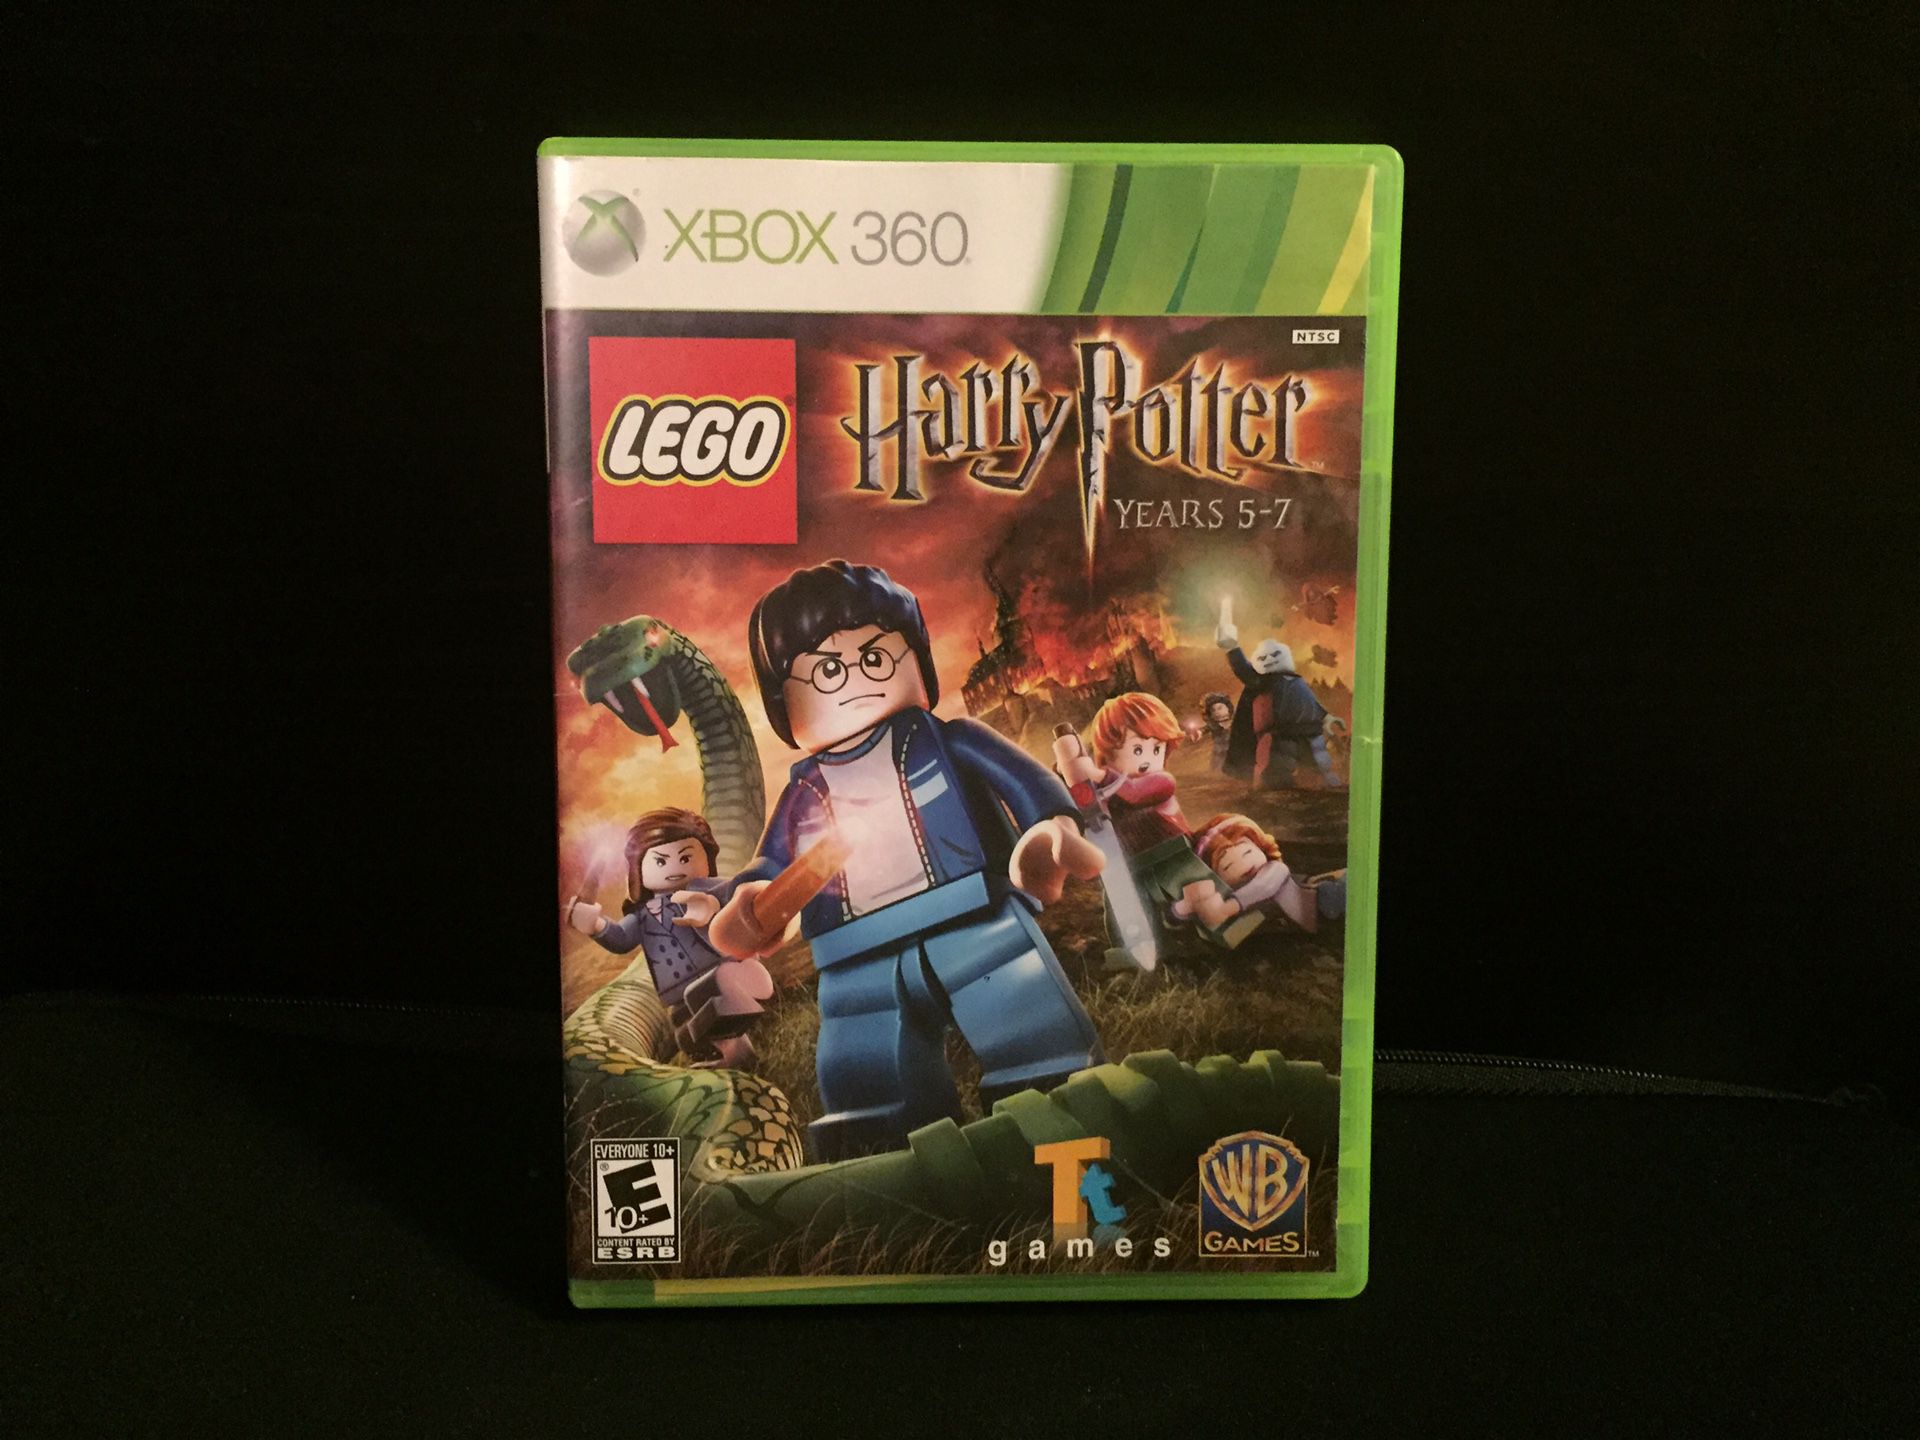 Harry Potter Yrs 5-7 (Xbox 360)